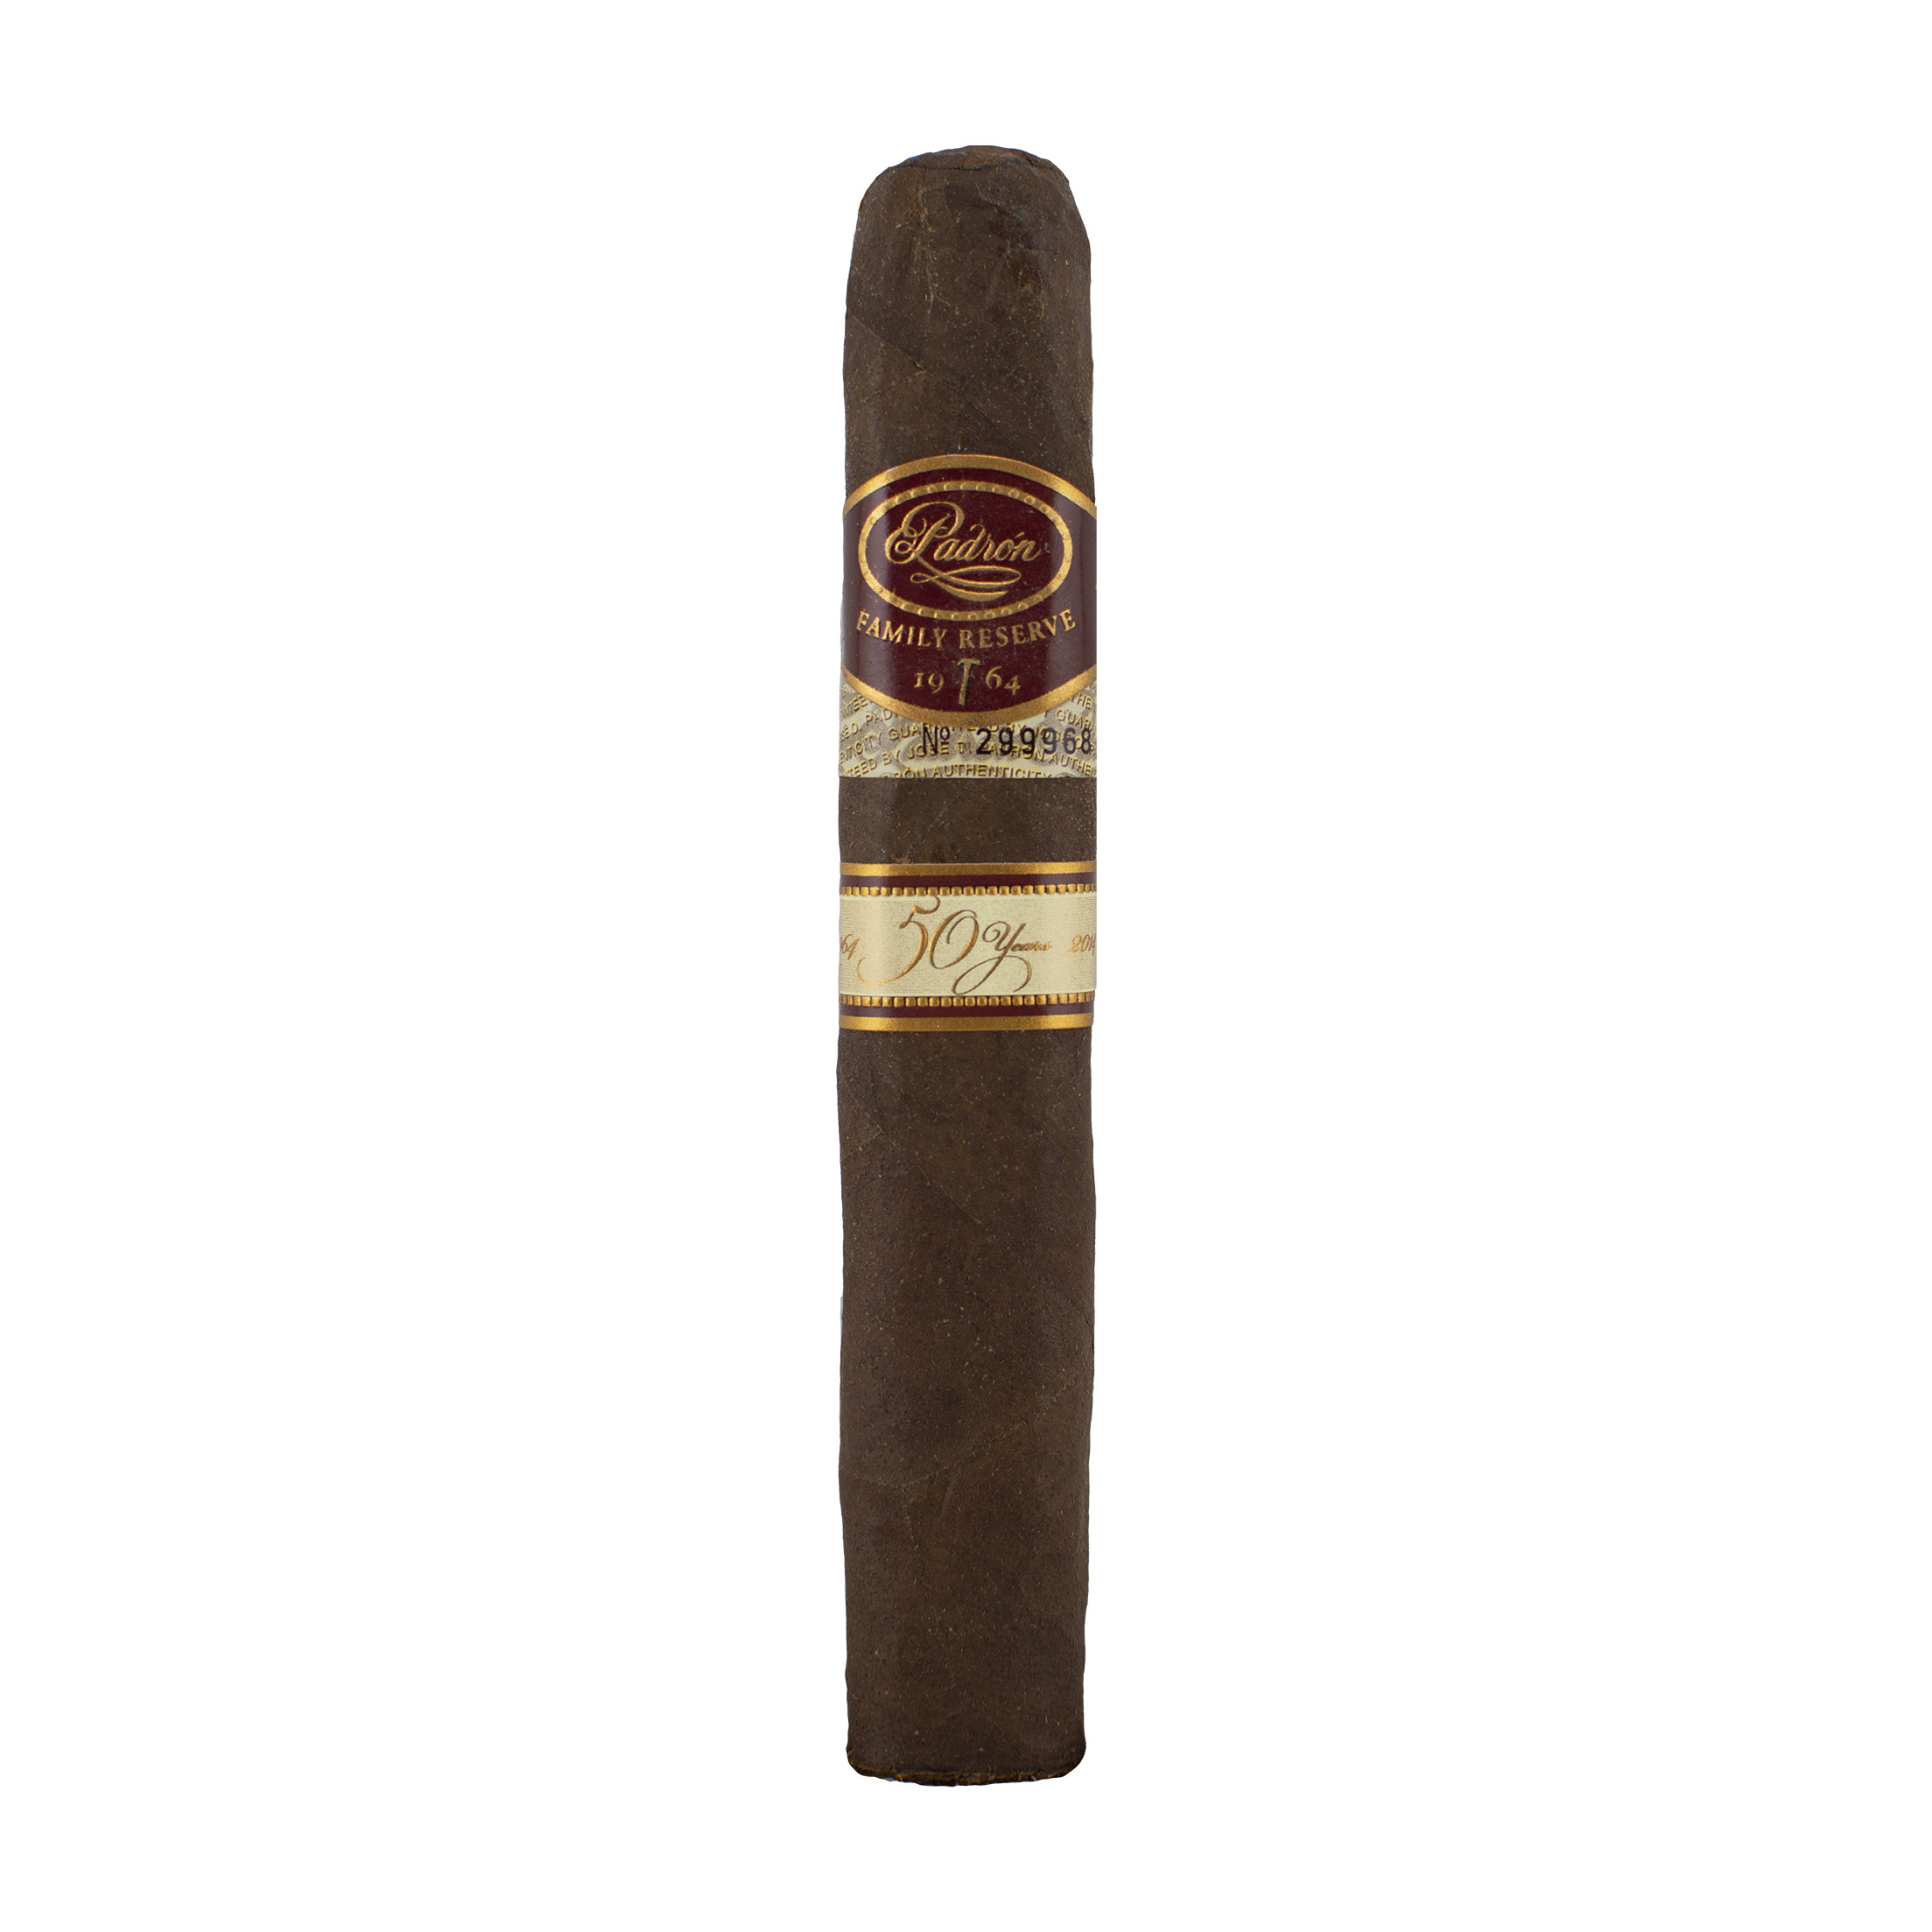 Padron Family Reserve No. 50 Maduro Robusto Cigar - Single